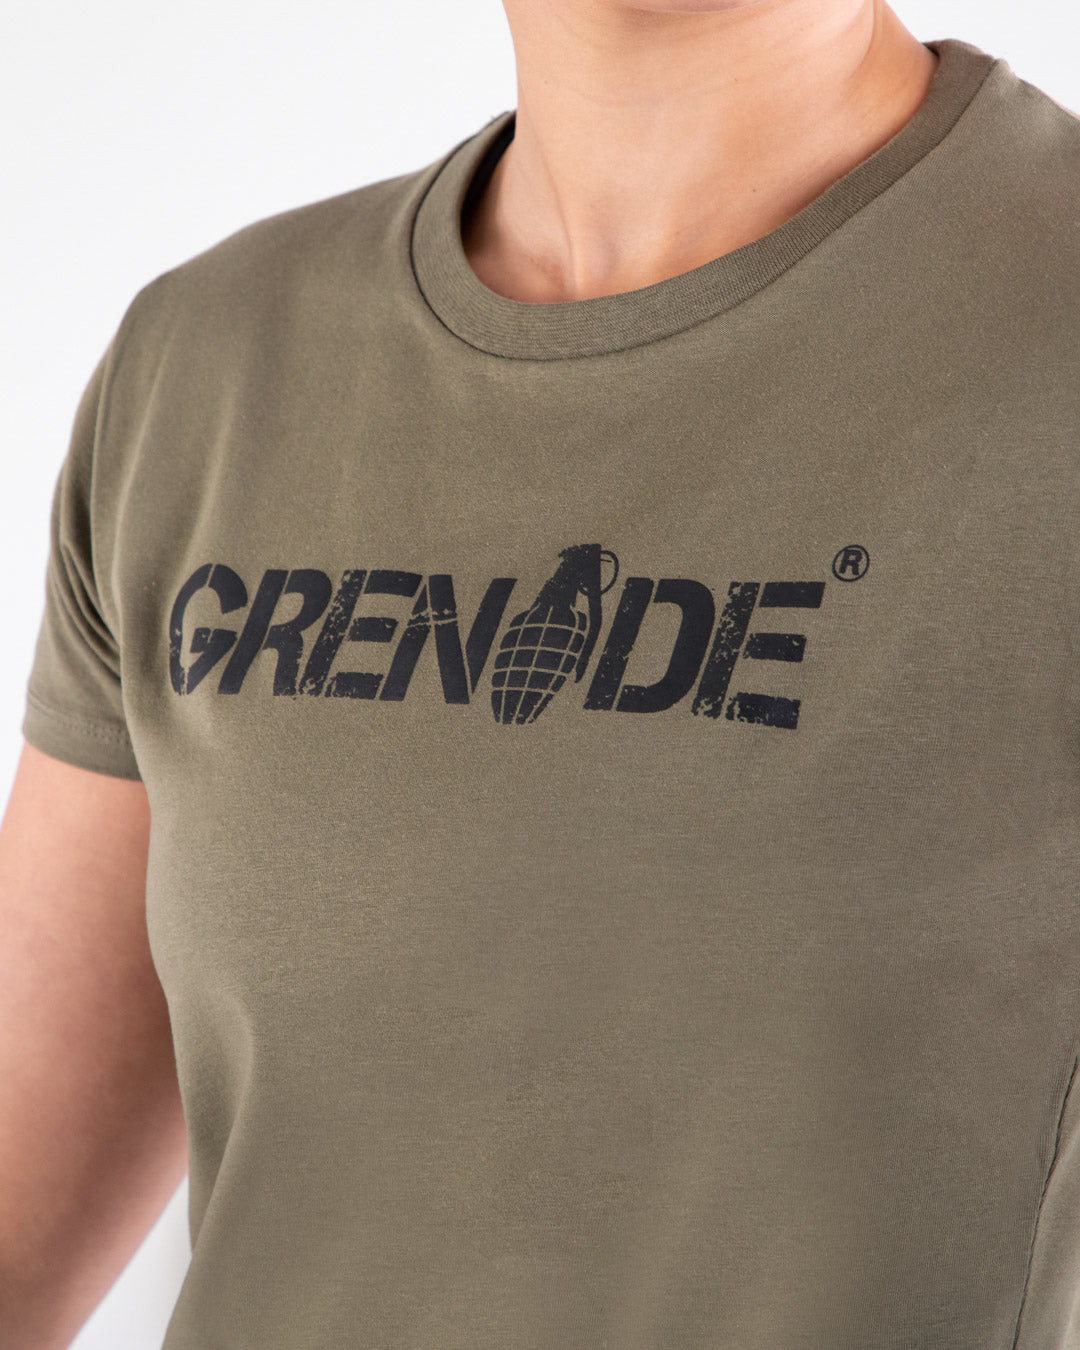 Grenade Womens Core T Shirt Army Green Close Up